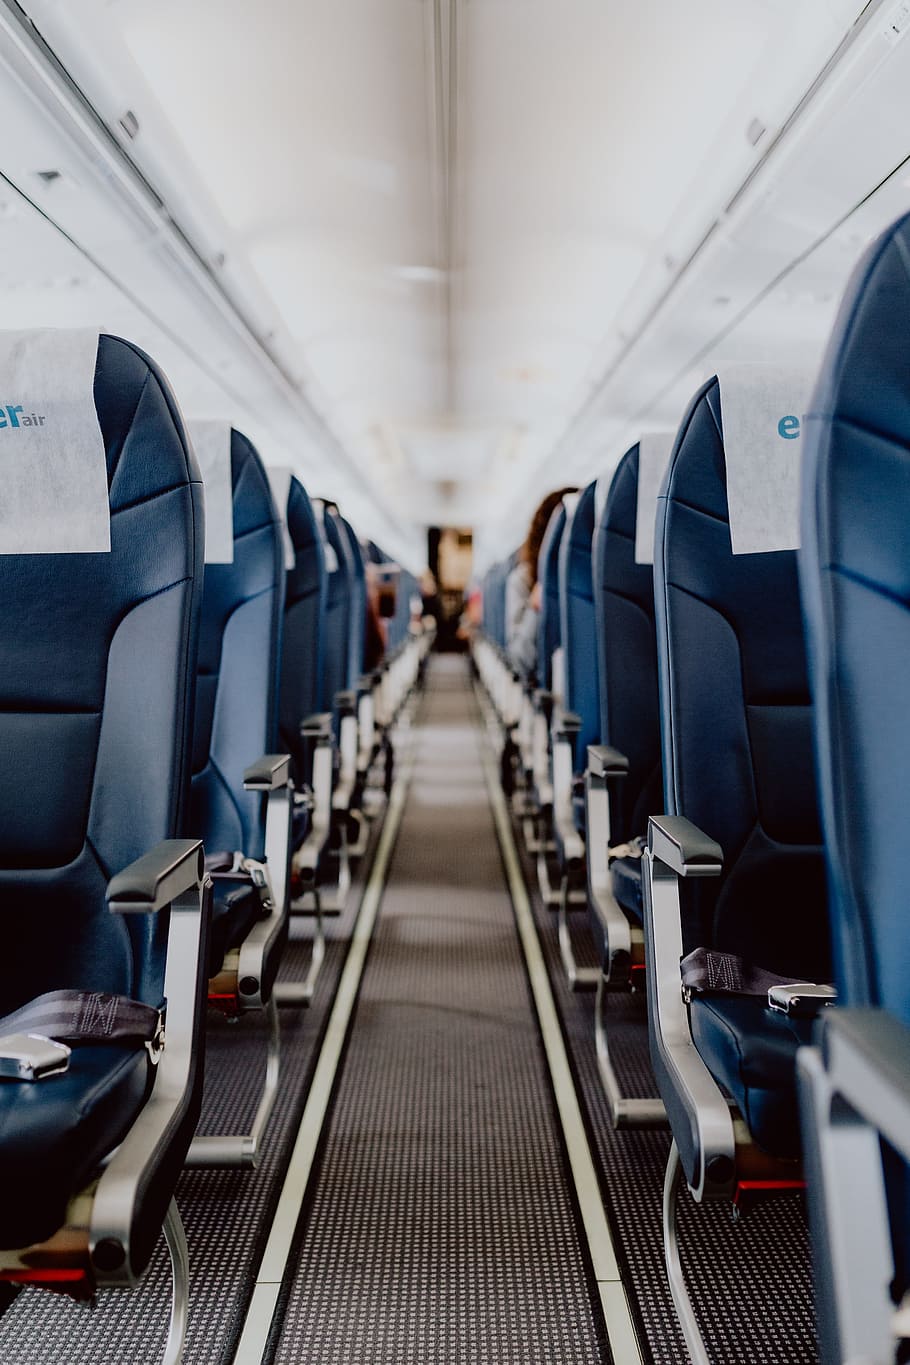 Interior of the passenger airplane, travel, seat, flight, aeroplane